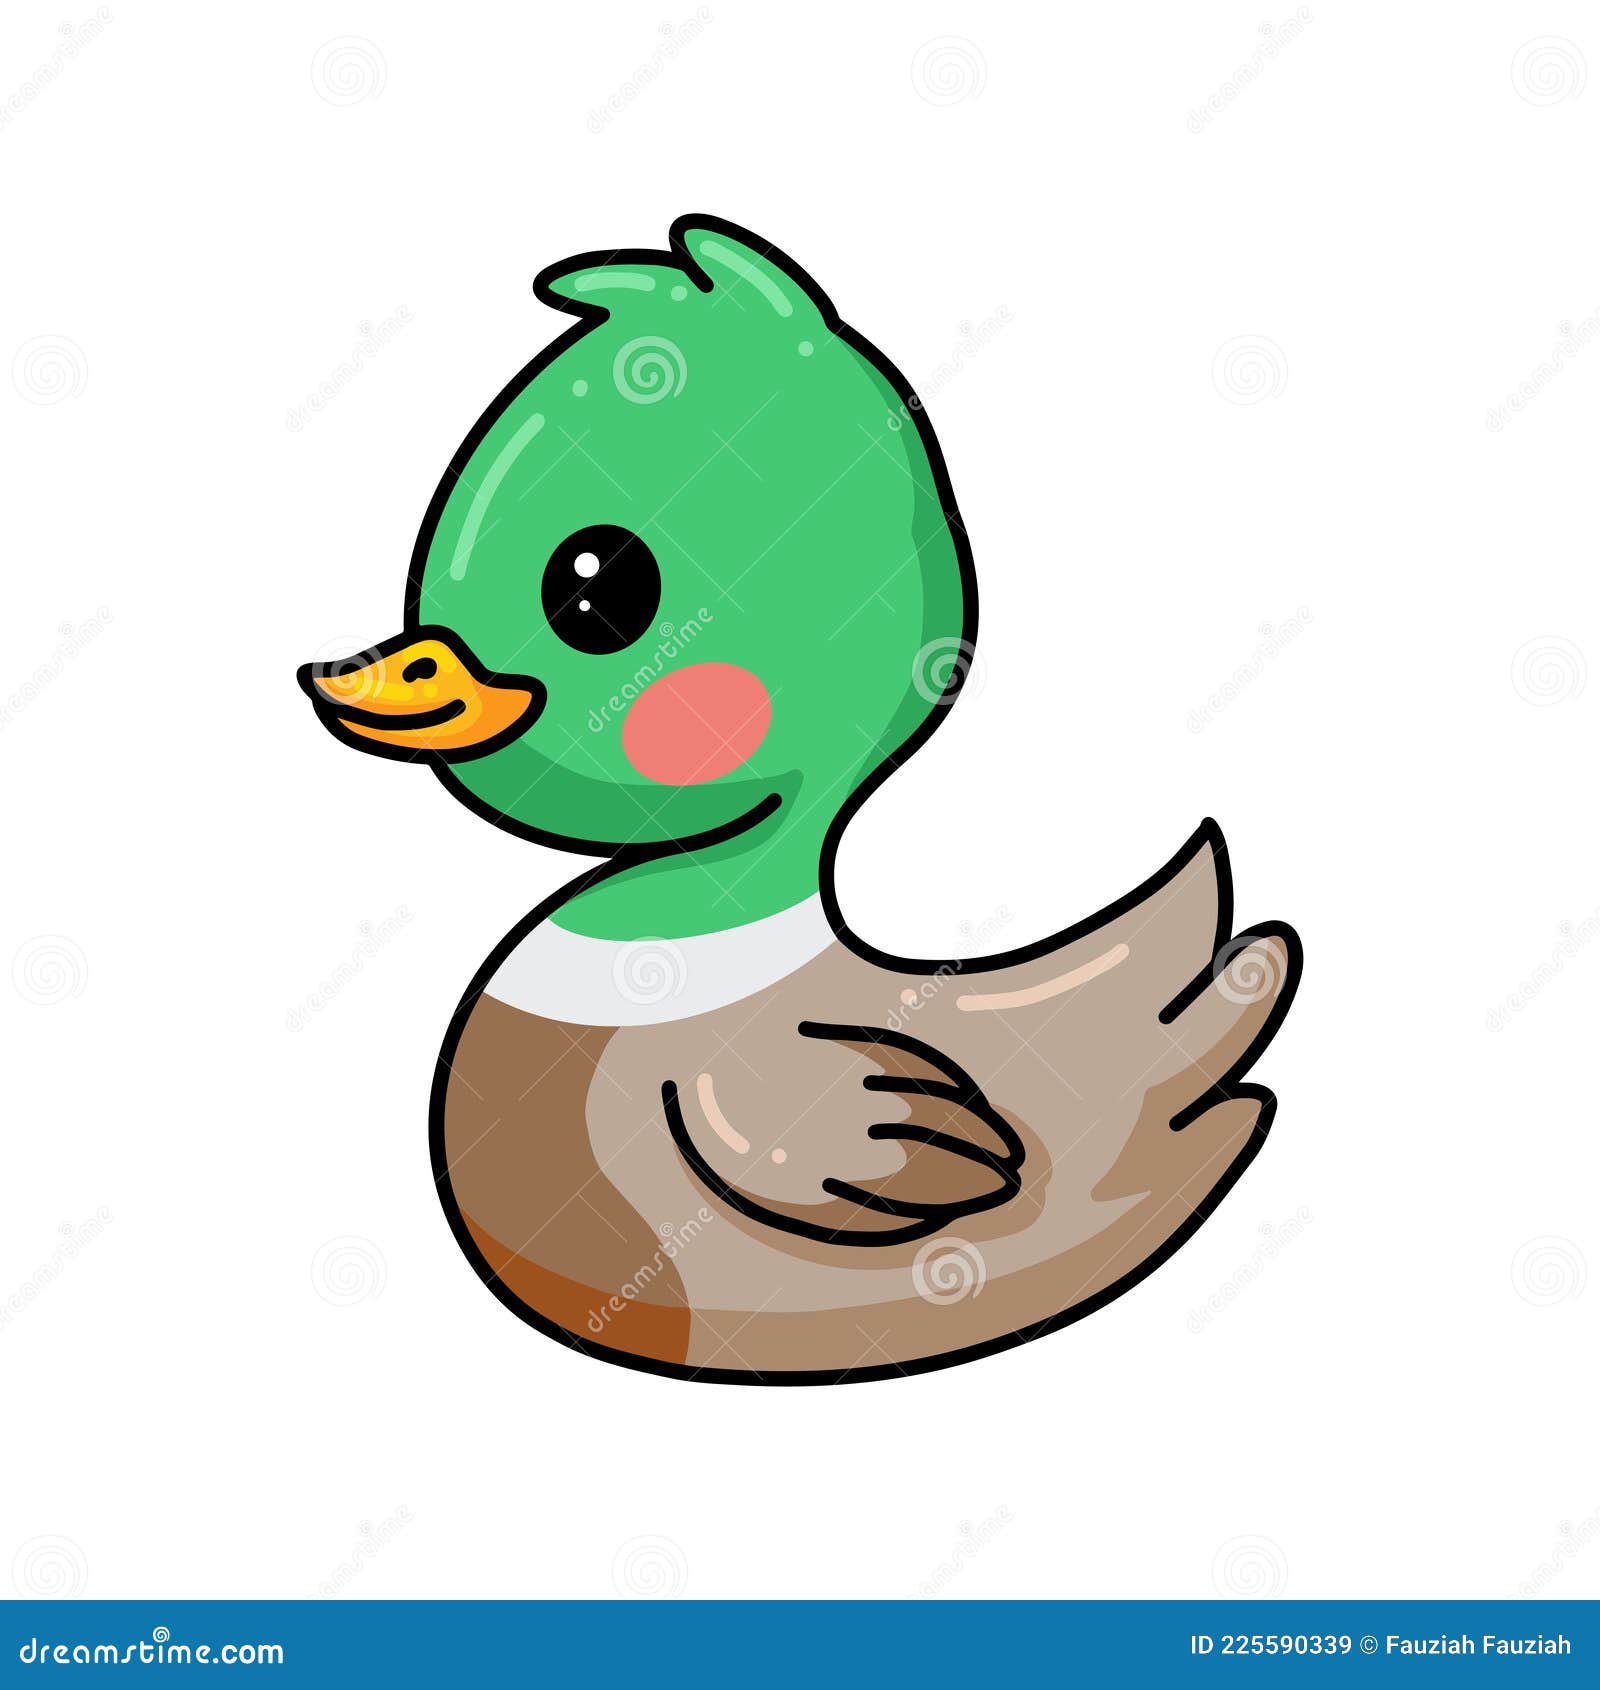 Cute Green Little Duck Cartoon Stock Vector - Illustration of goose,  mascot: 225590339